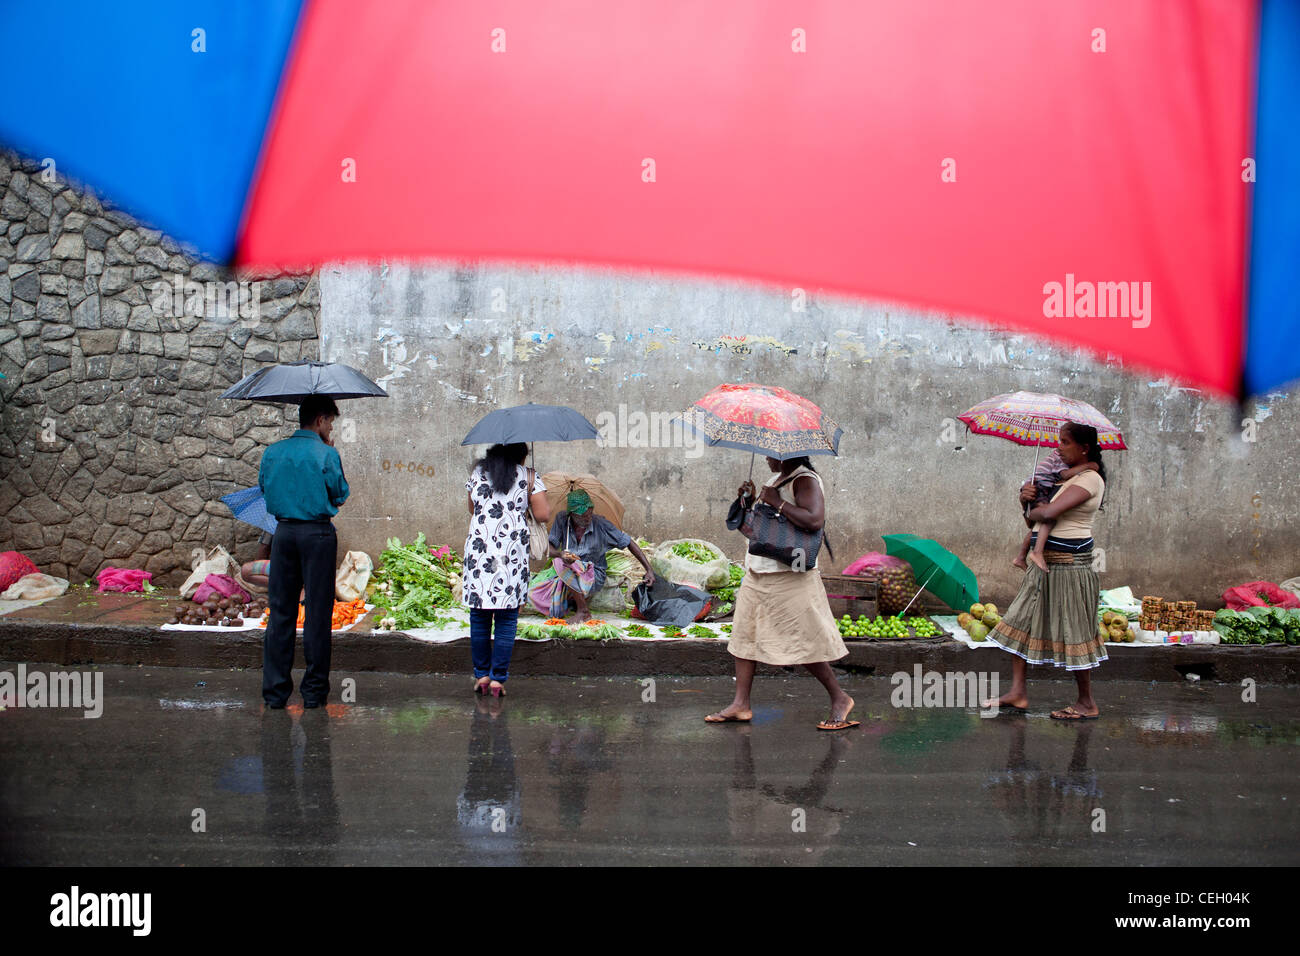 People on a rainy day at road side market Kandy Sri Lanka Asia Stock Photo